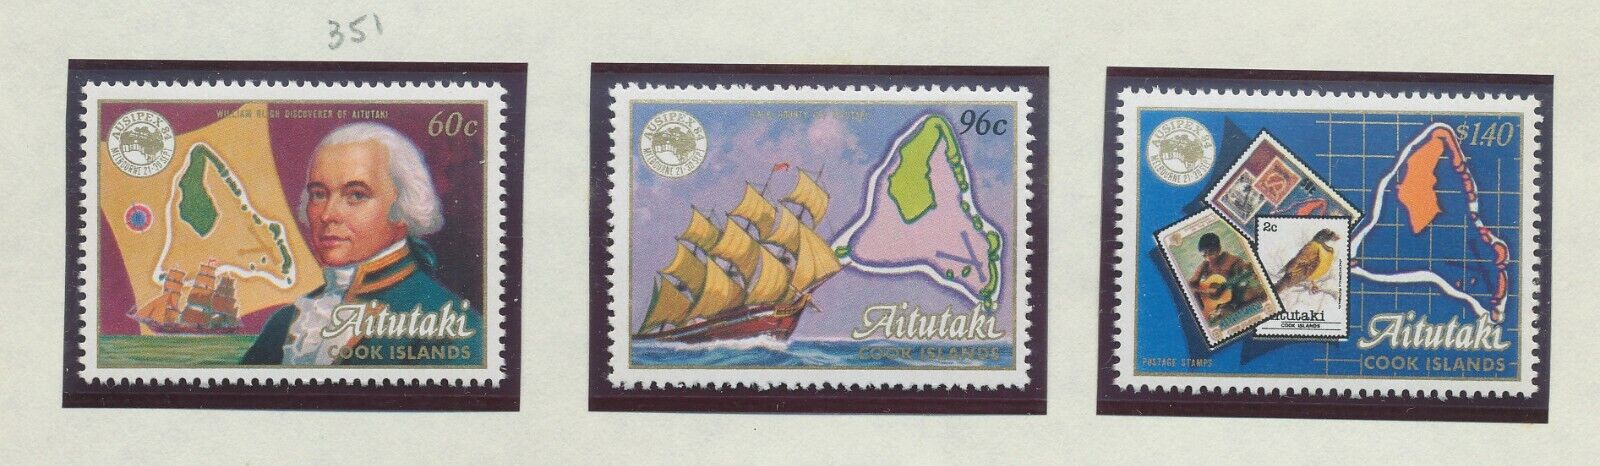 AITUTAKI - Sc 351-353  - FVF MNH - Ausipex, map, shop, stamp-on-stamp -1984